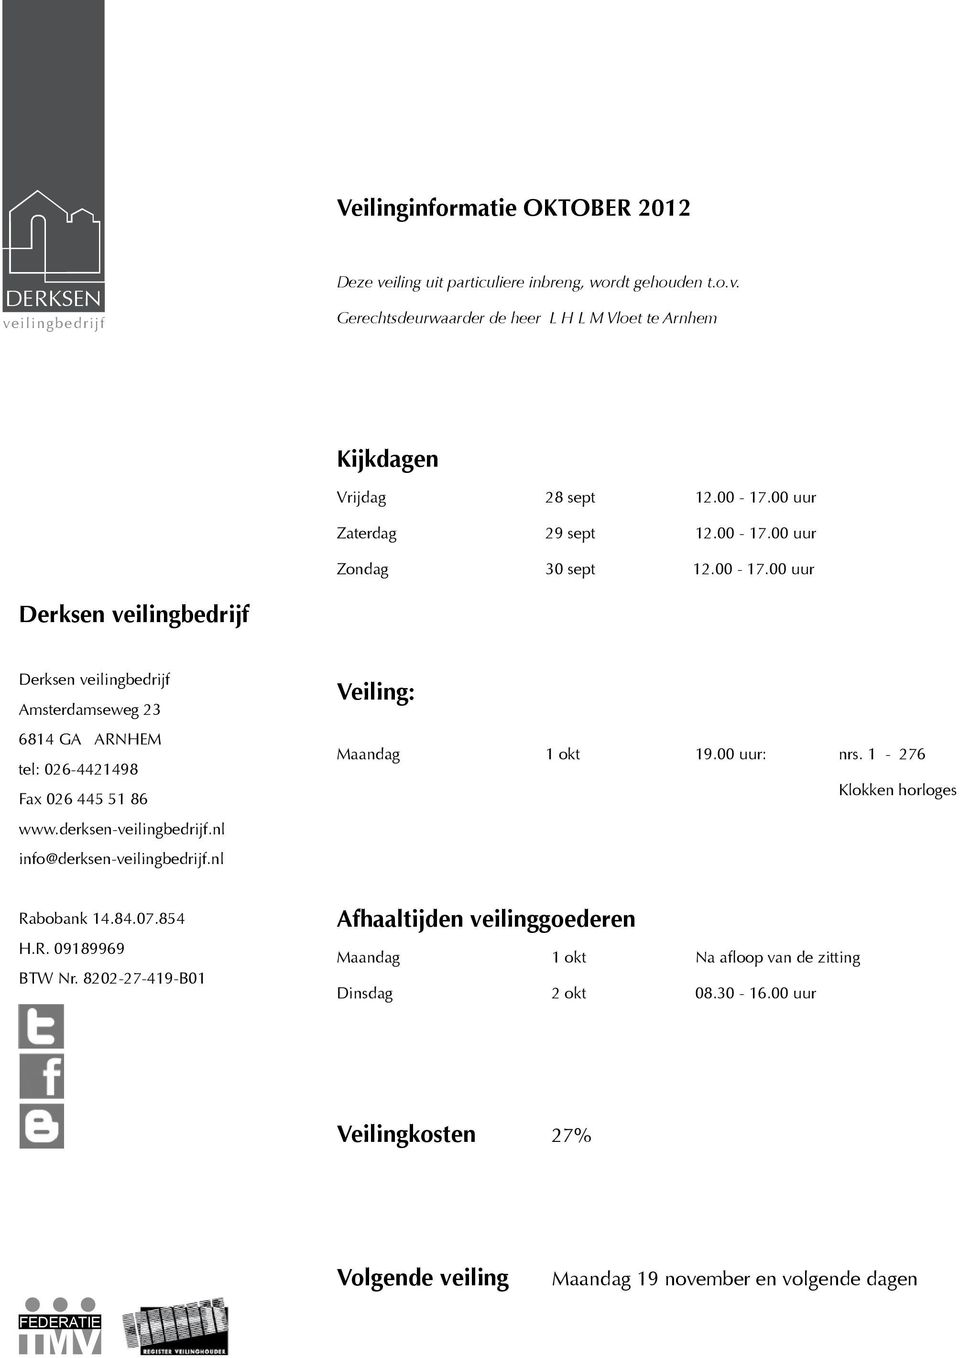 derksen-veilingbedrijf.nl info@derksen-veilingbedrijf.nl Rabobank 14.84.07.854 H.R. 09189969 BTW Nr. 8202-27-419-B01 Veiling: Maandag 1 okt 19.00 uur: nrs.